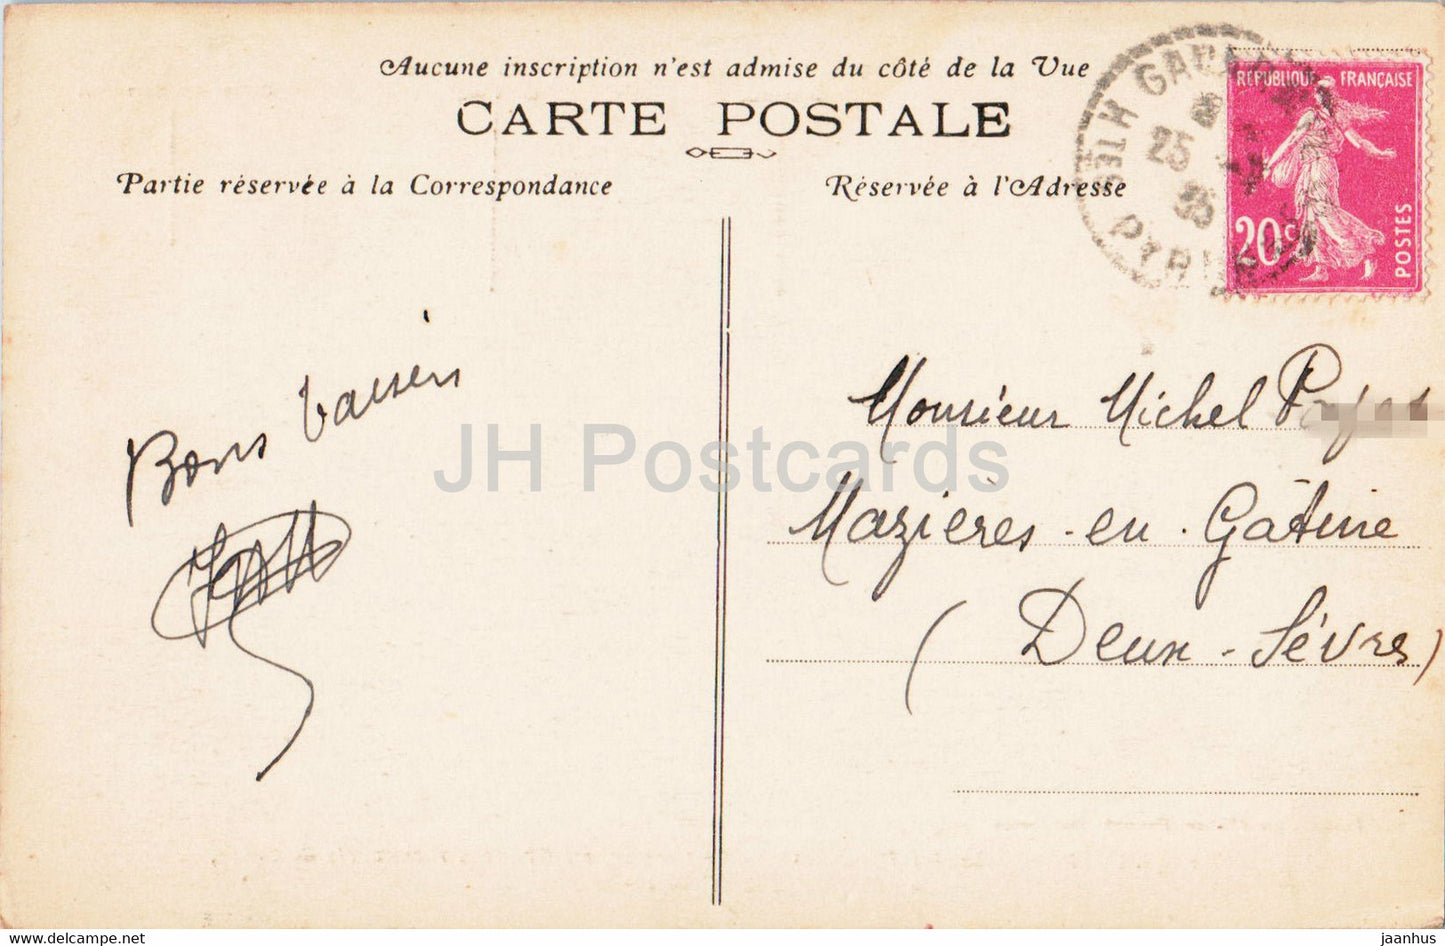 Gavarnie - Le Cirque ses Gradins recouverts de neige sa Cascade - 4 - carte postale ancienne - 1935 - France - occasion